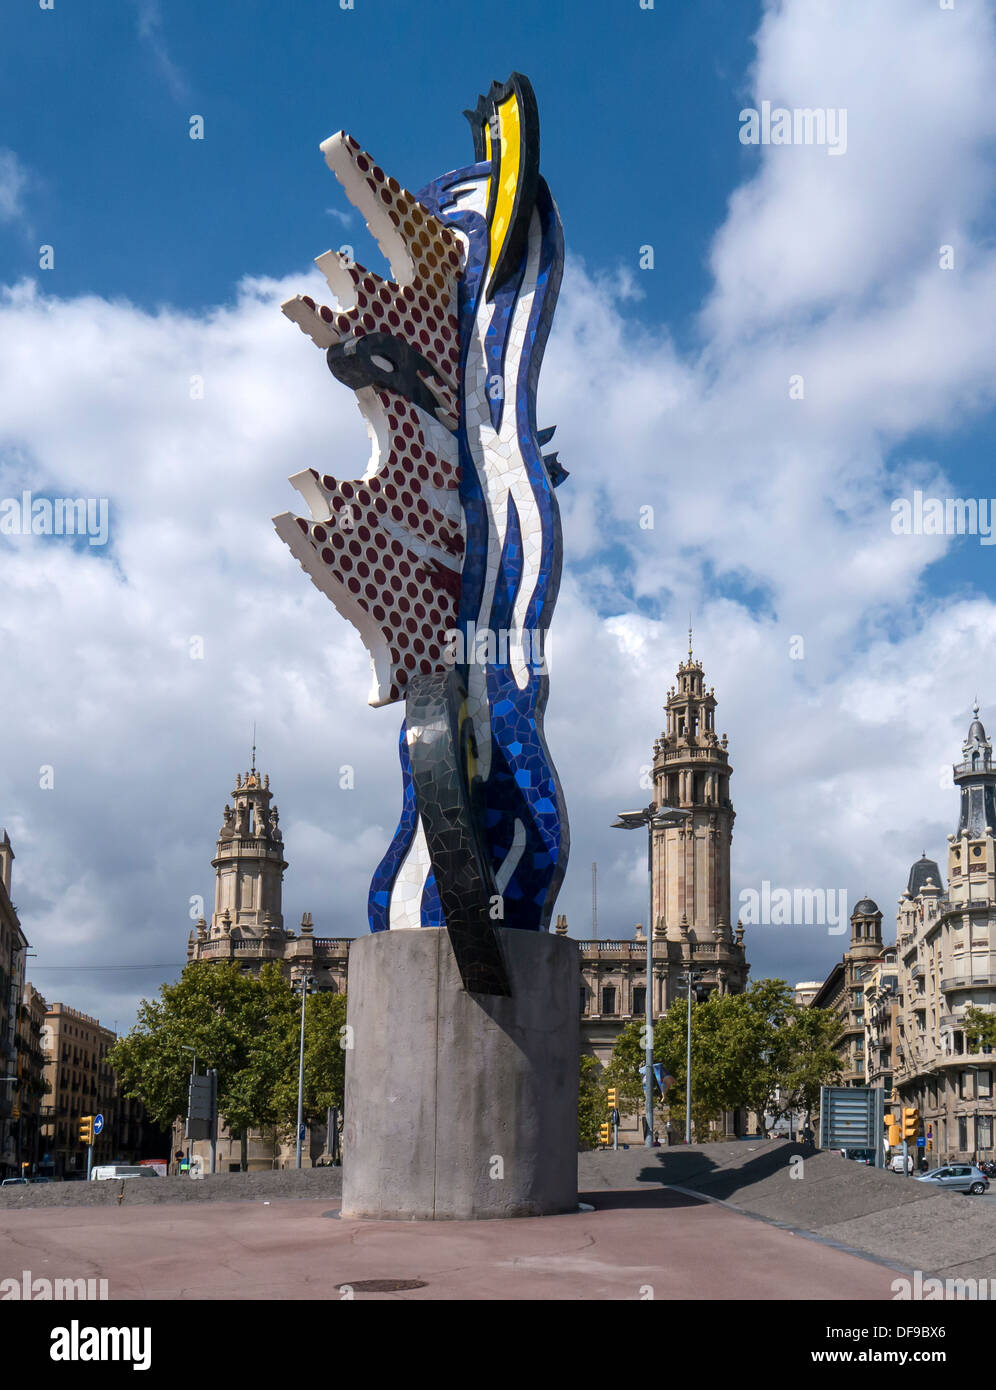 Le El Cap de Barcelona La sculpture à Port Vell, Barcelone Photo Stock -  Alamy